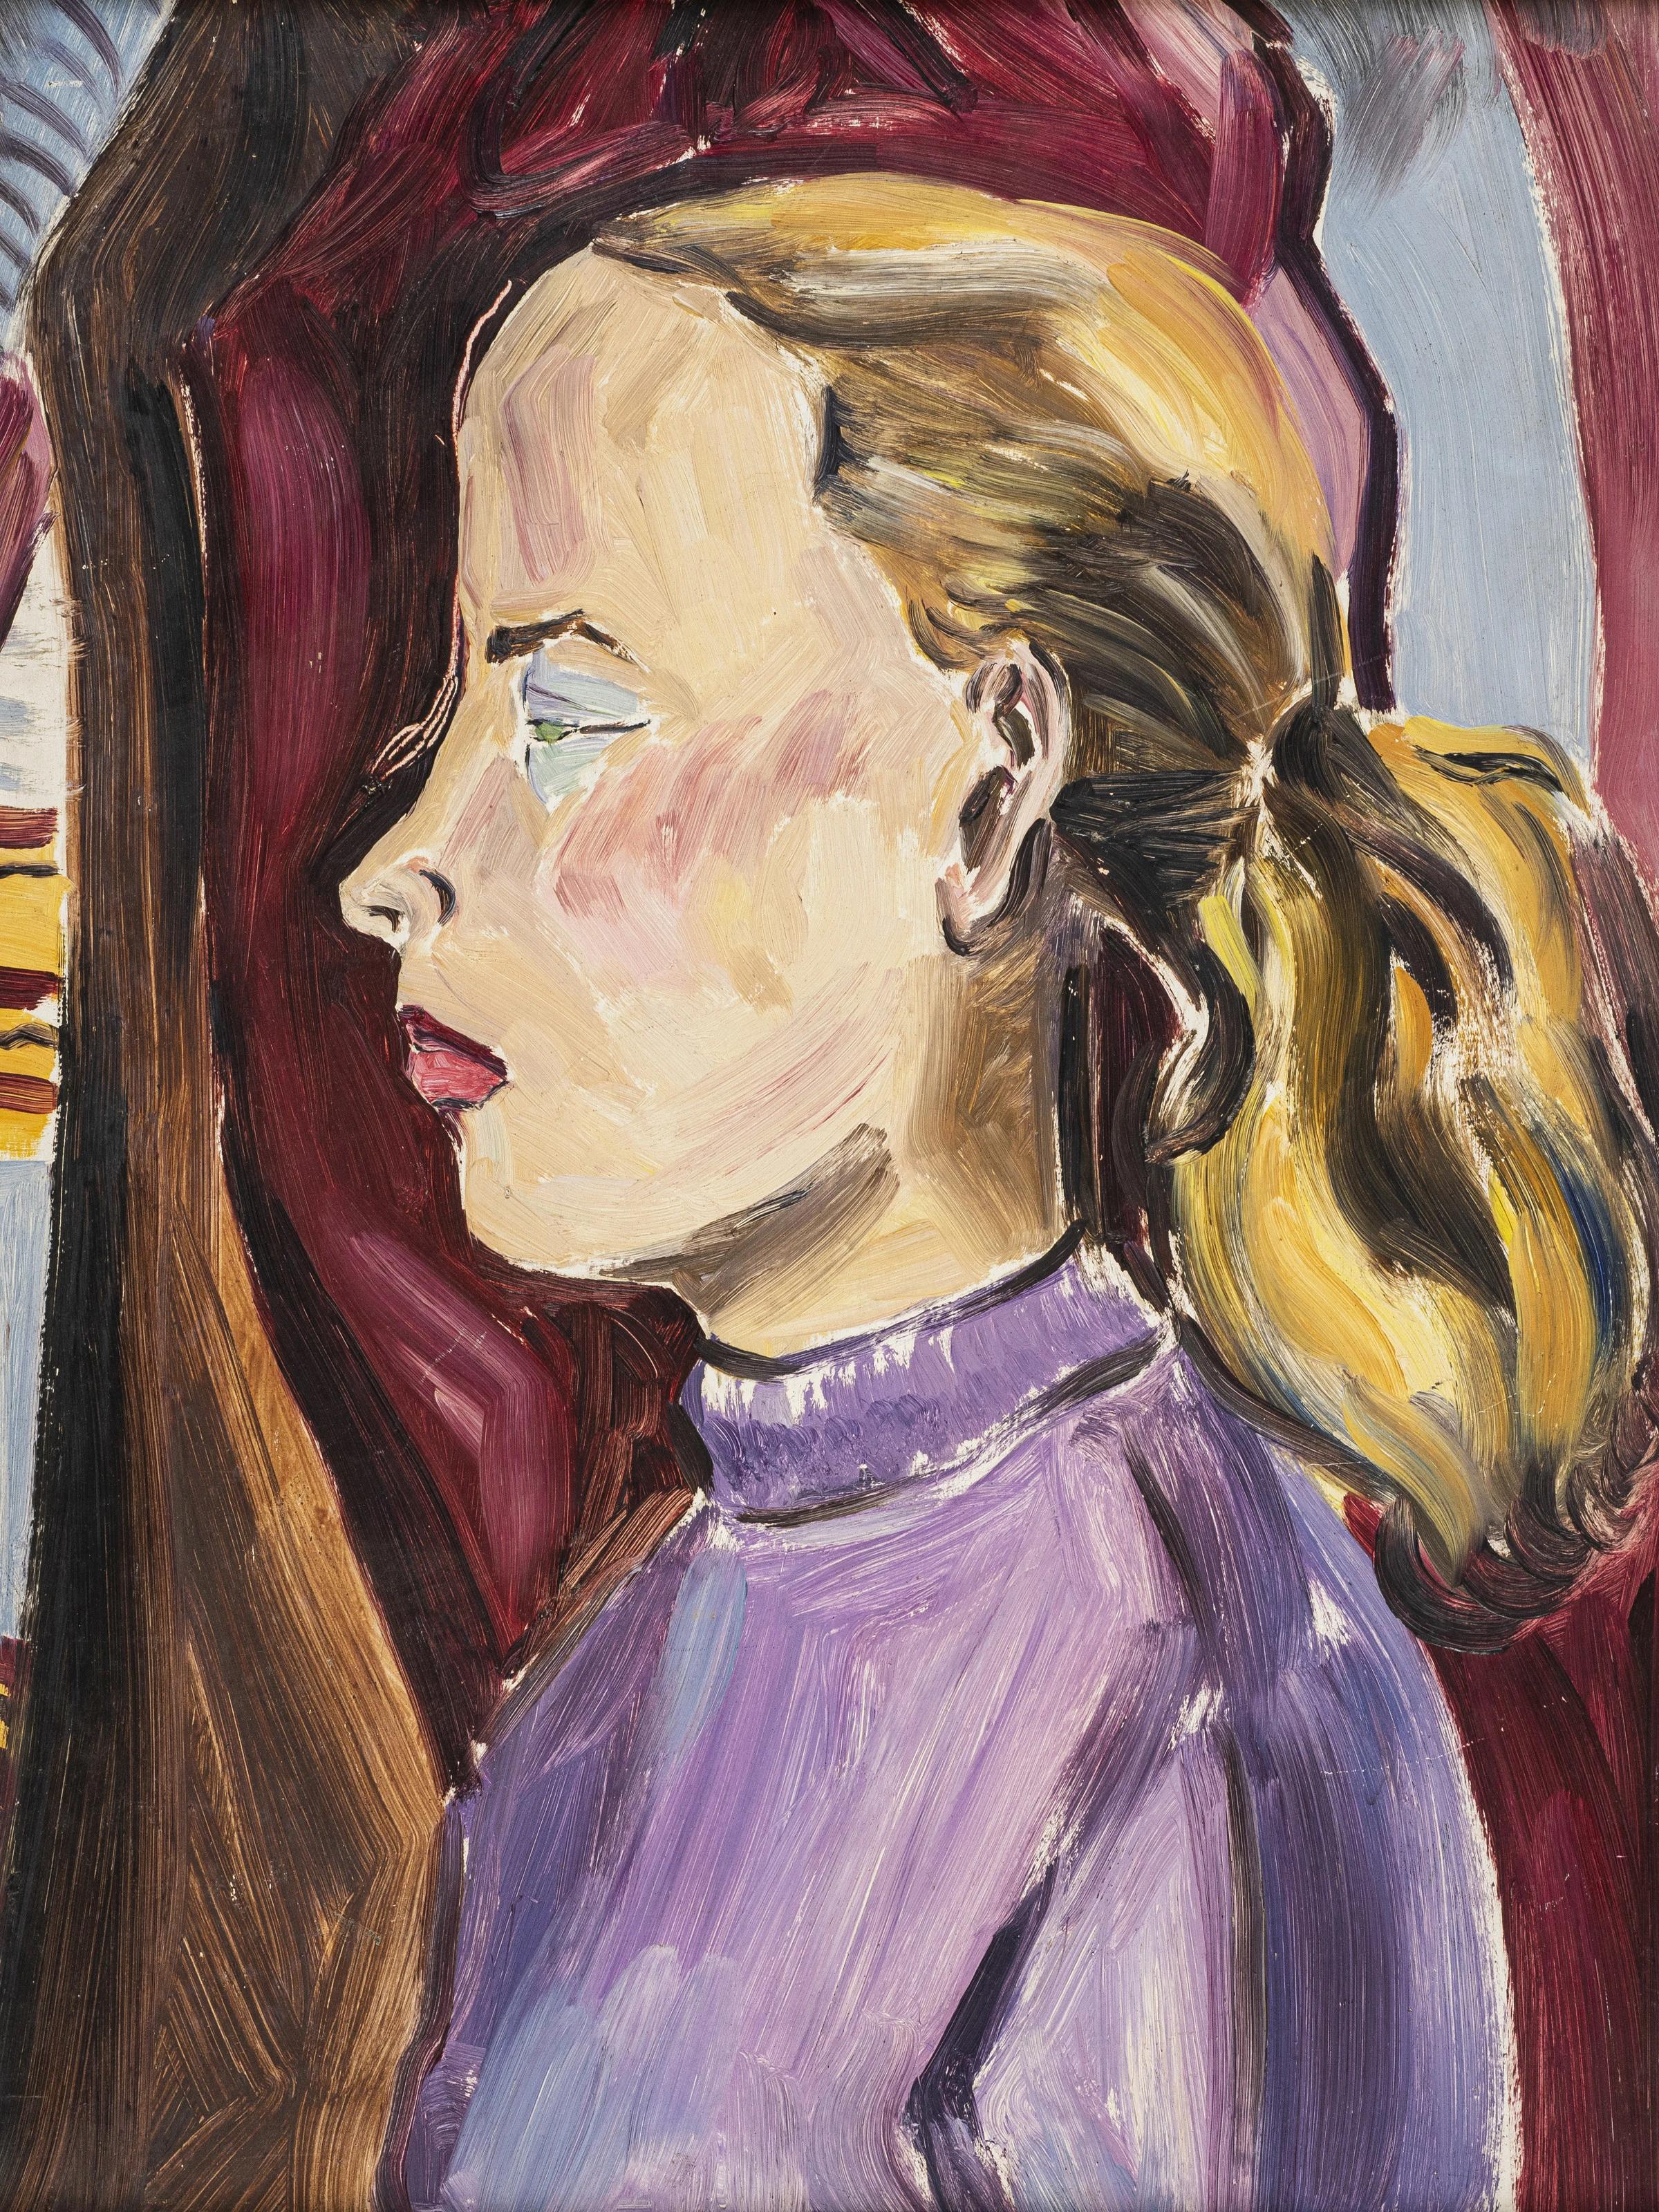 Inji EFFLATOUN Portrait Painting - "Profile of Girl" Oil on Canvas 18" x 16" inch by Inji Efflatoun